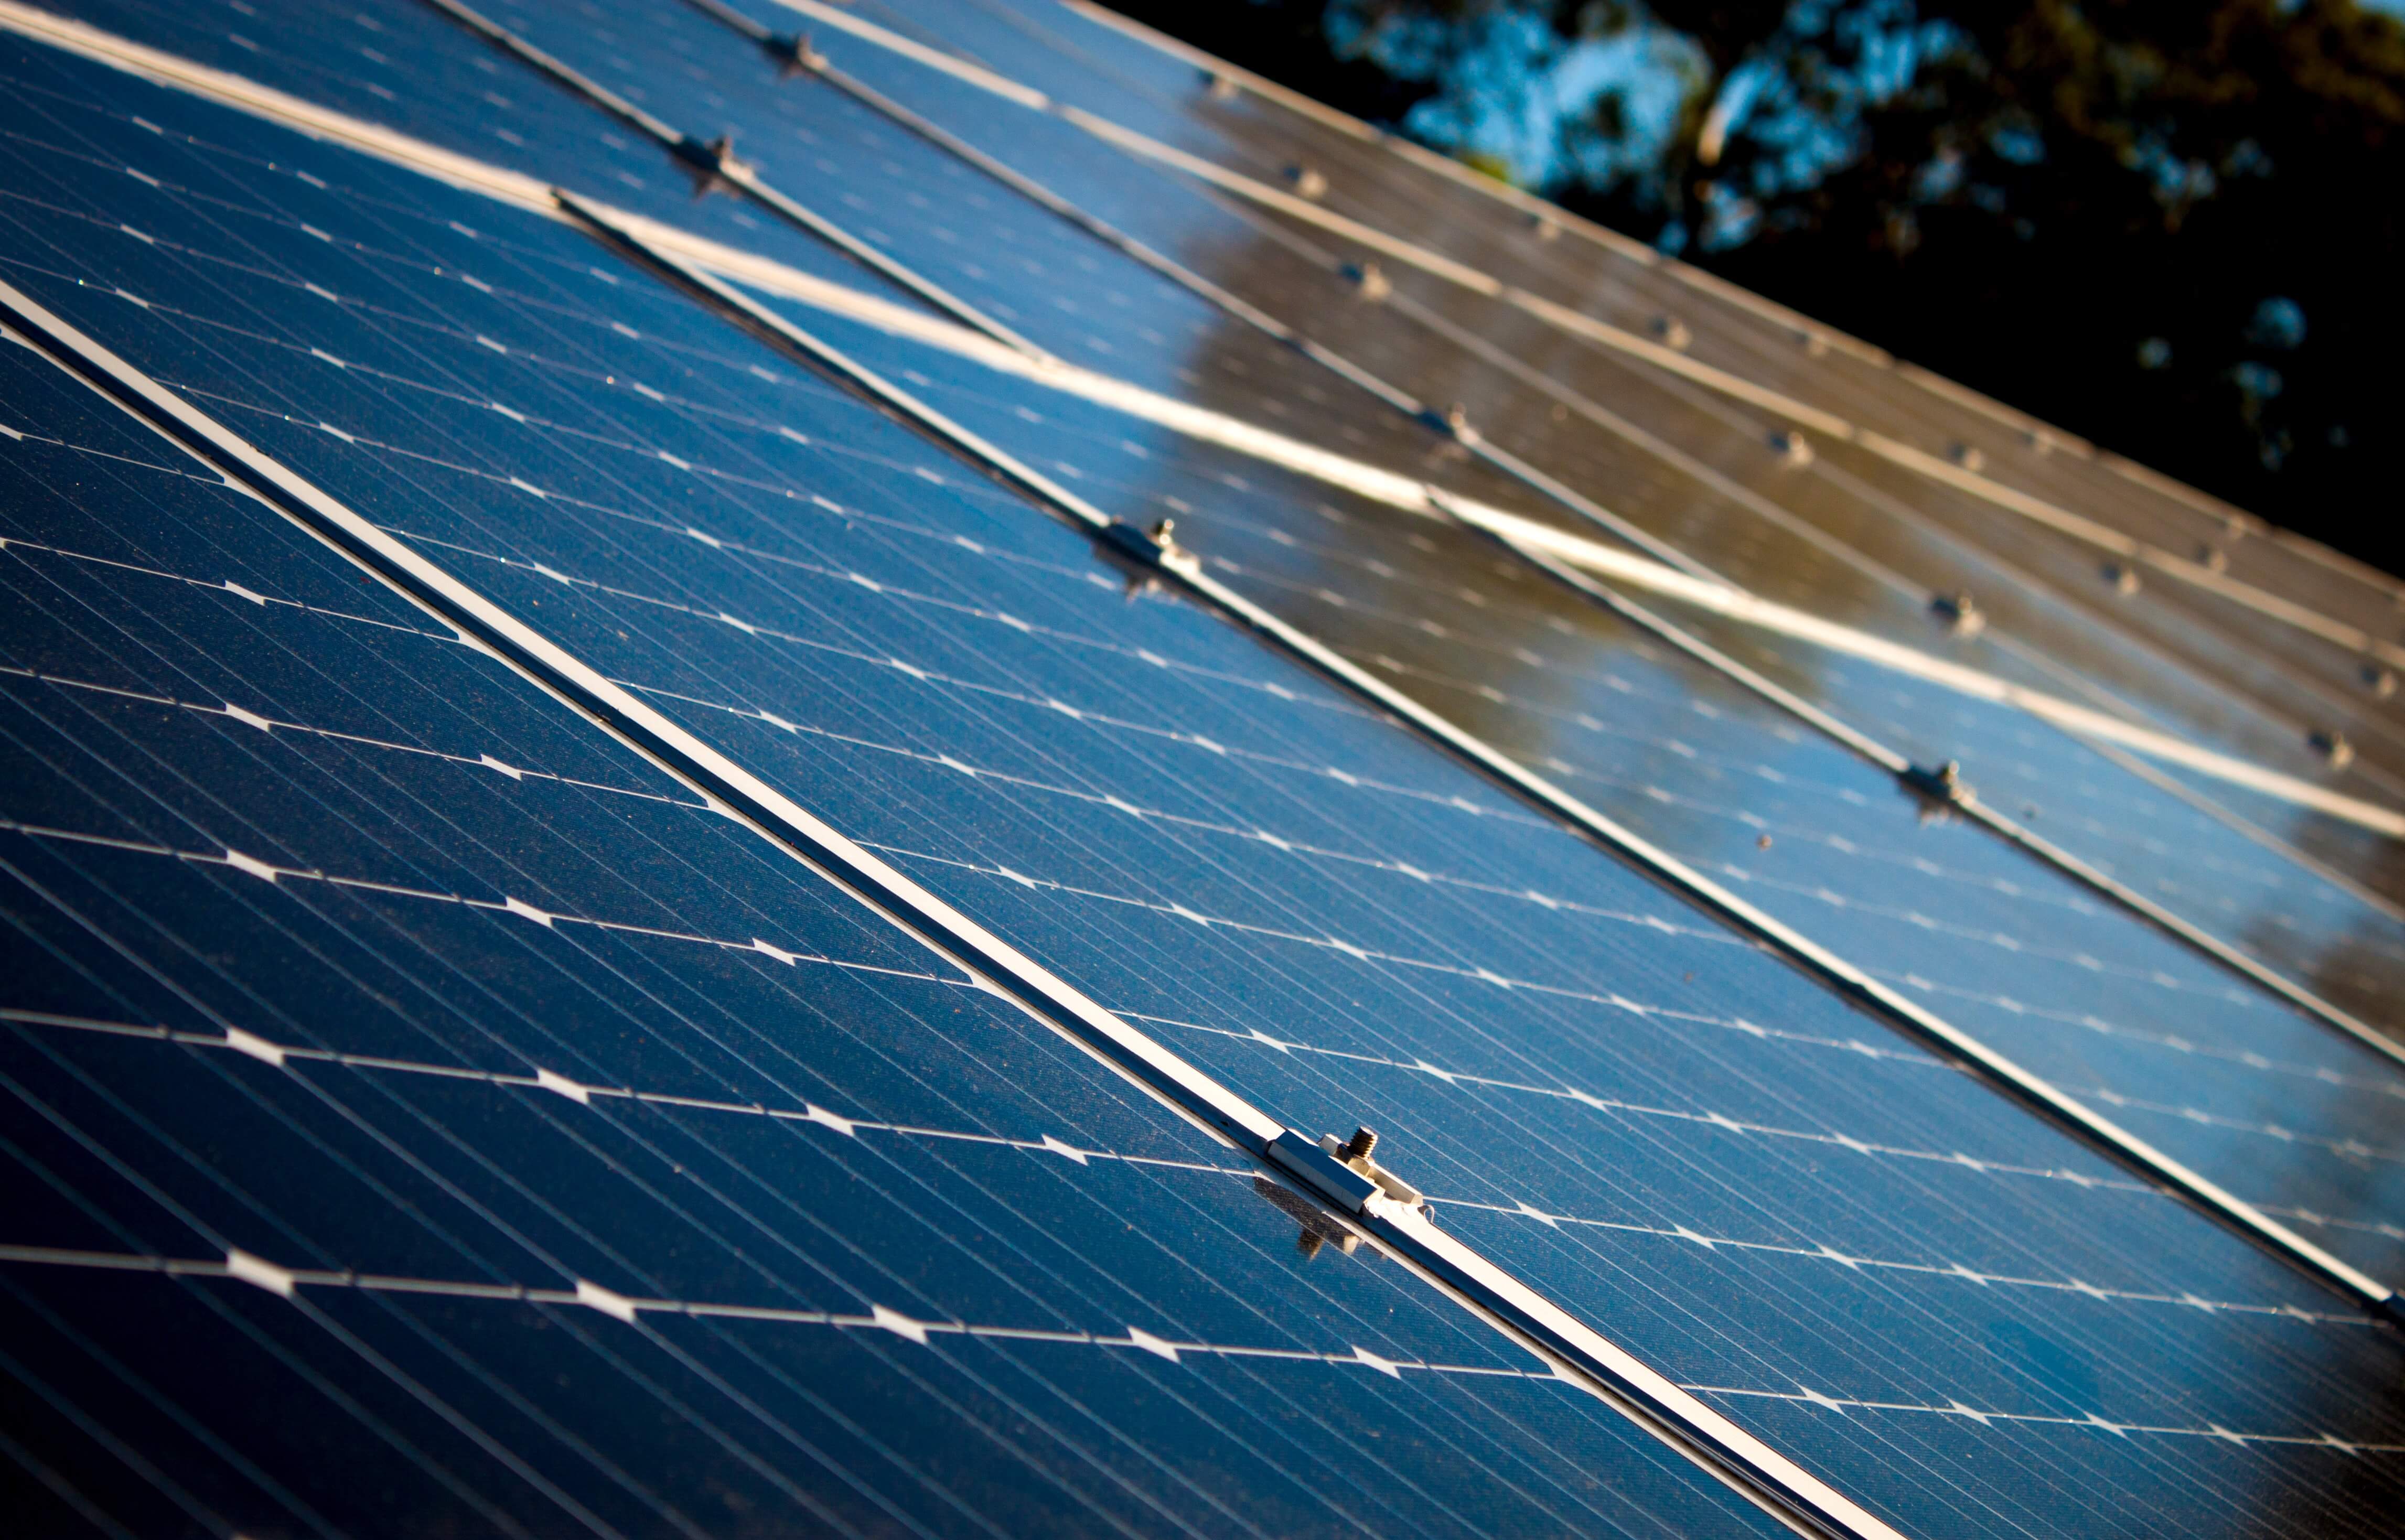  energía solar fotovoltaica